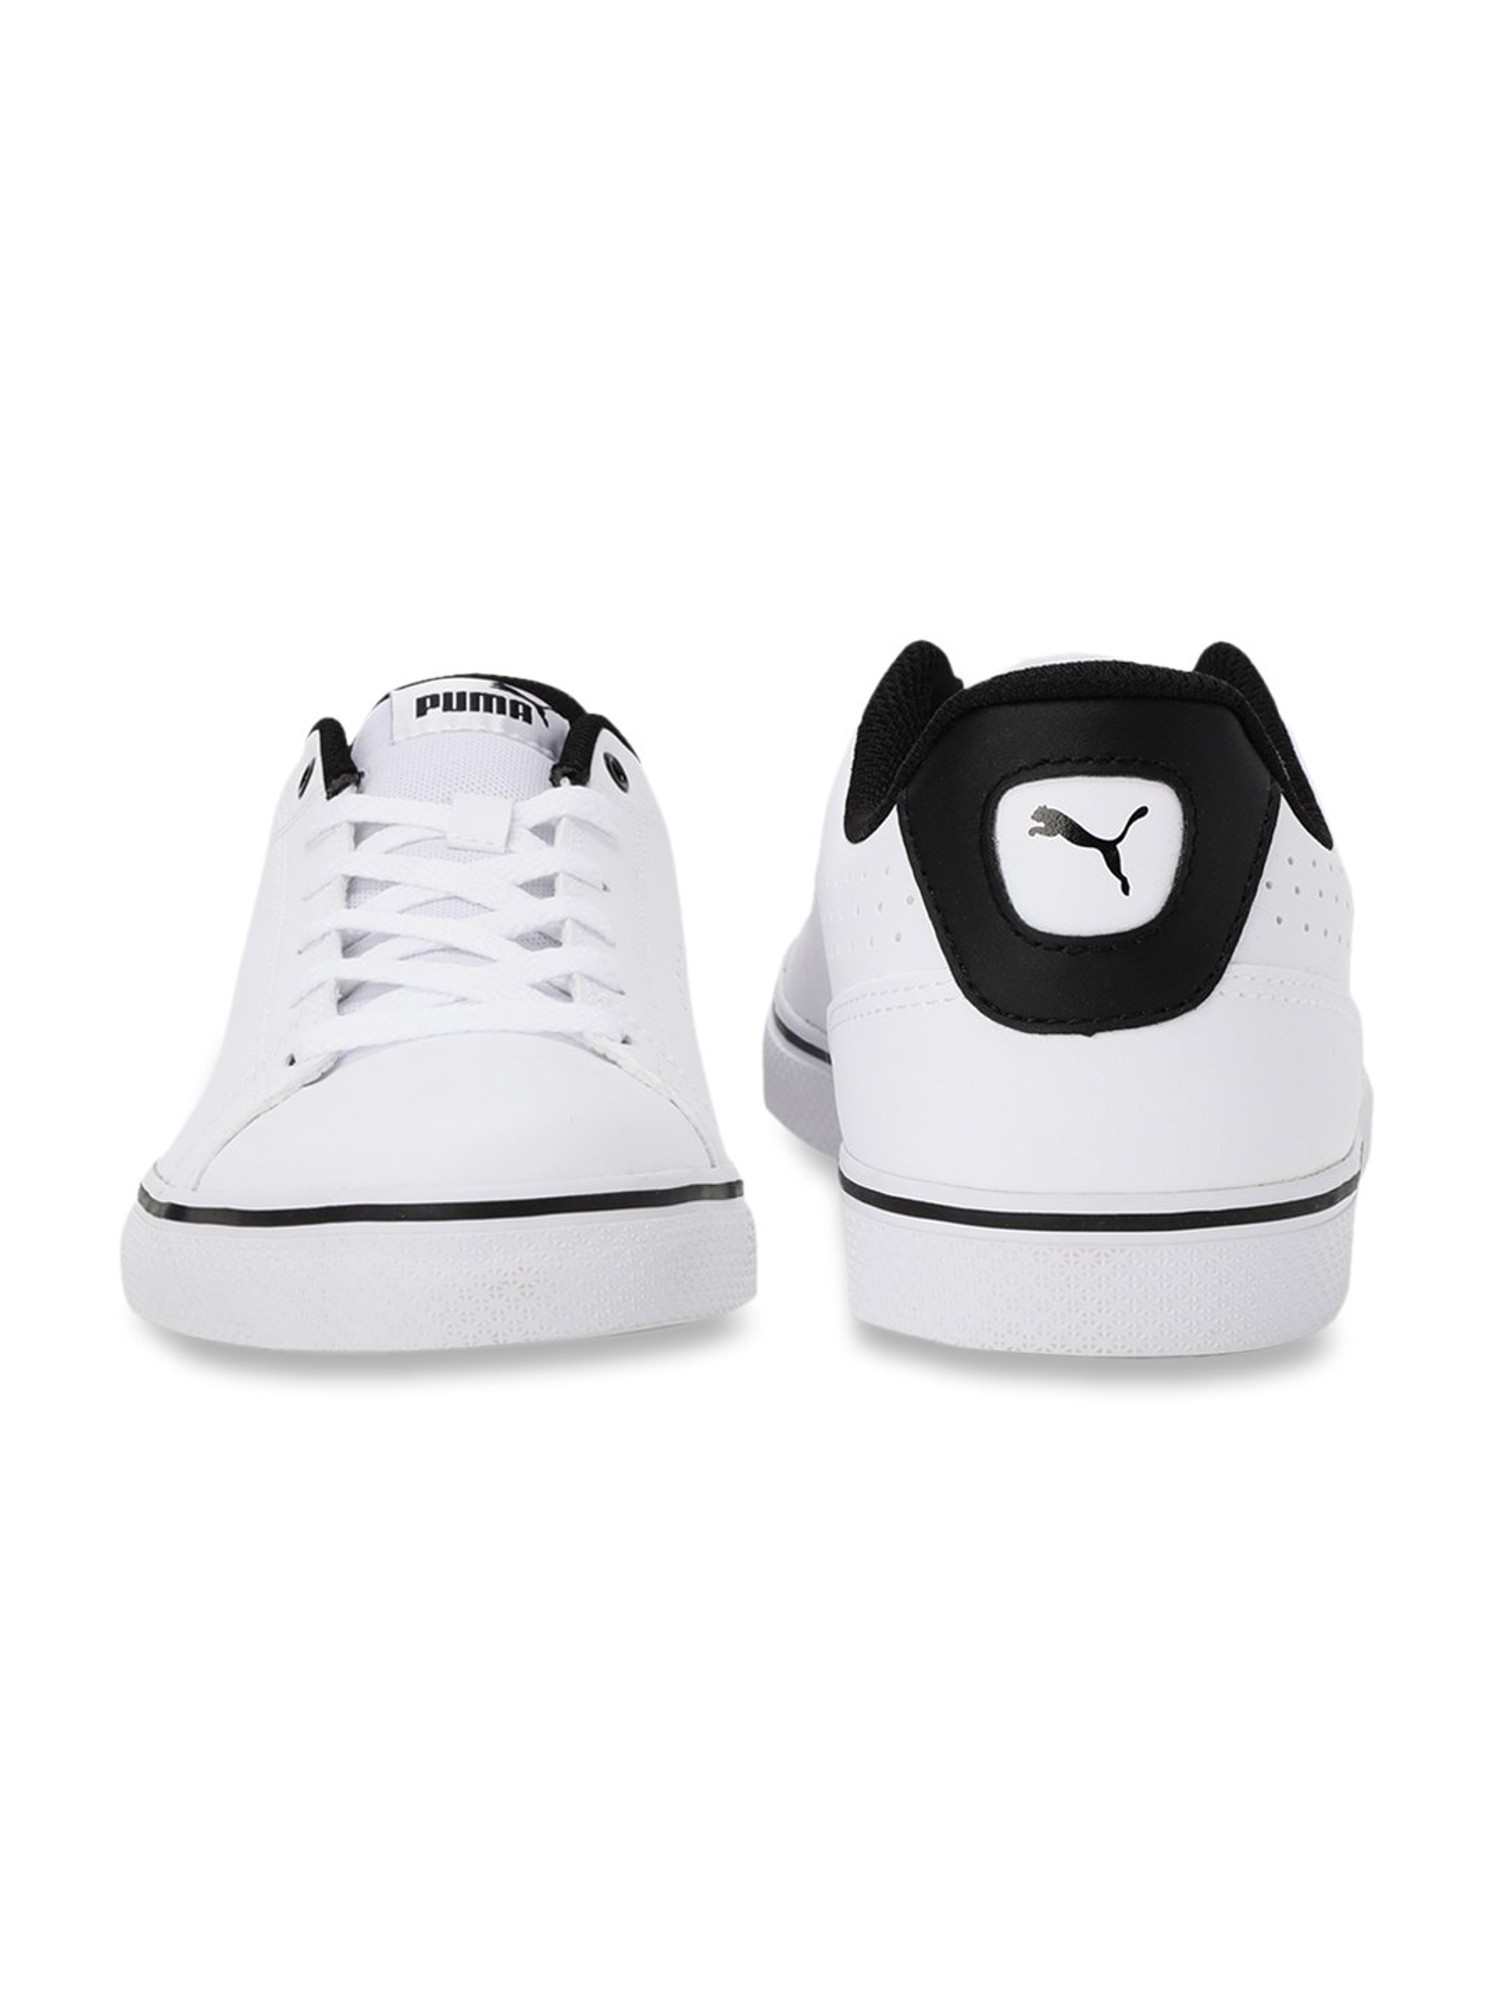 Puma Smash Vulc Sneakers In Black | ModeSens | Puma smash, Puma, Sneakers